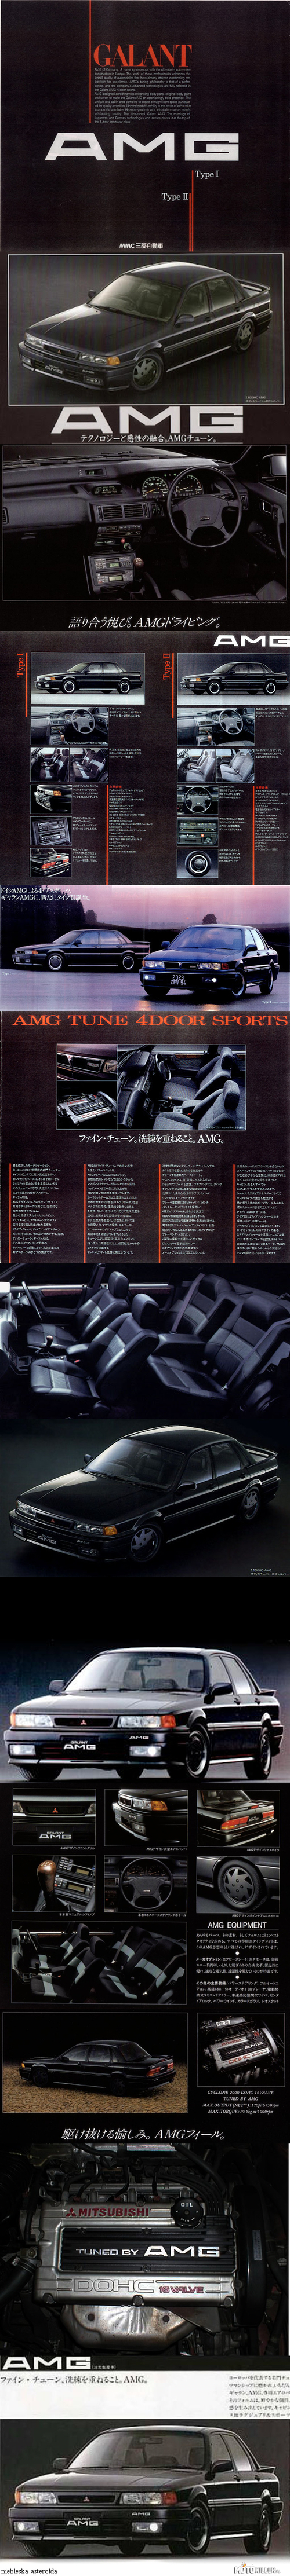 Mitsubishi Galant E33A AMG